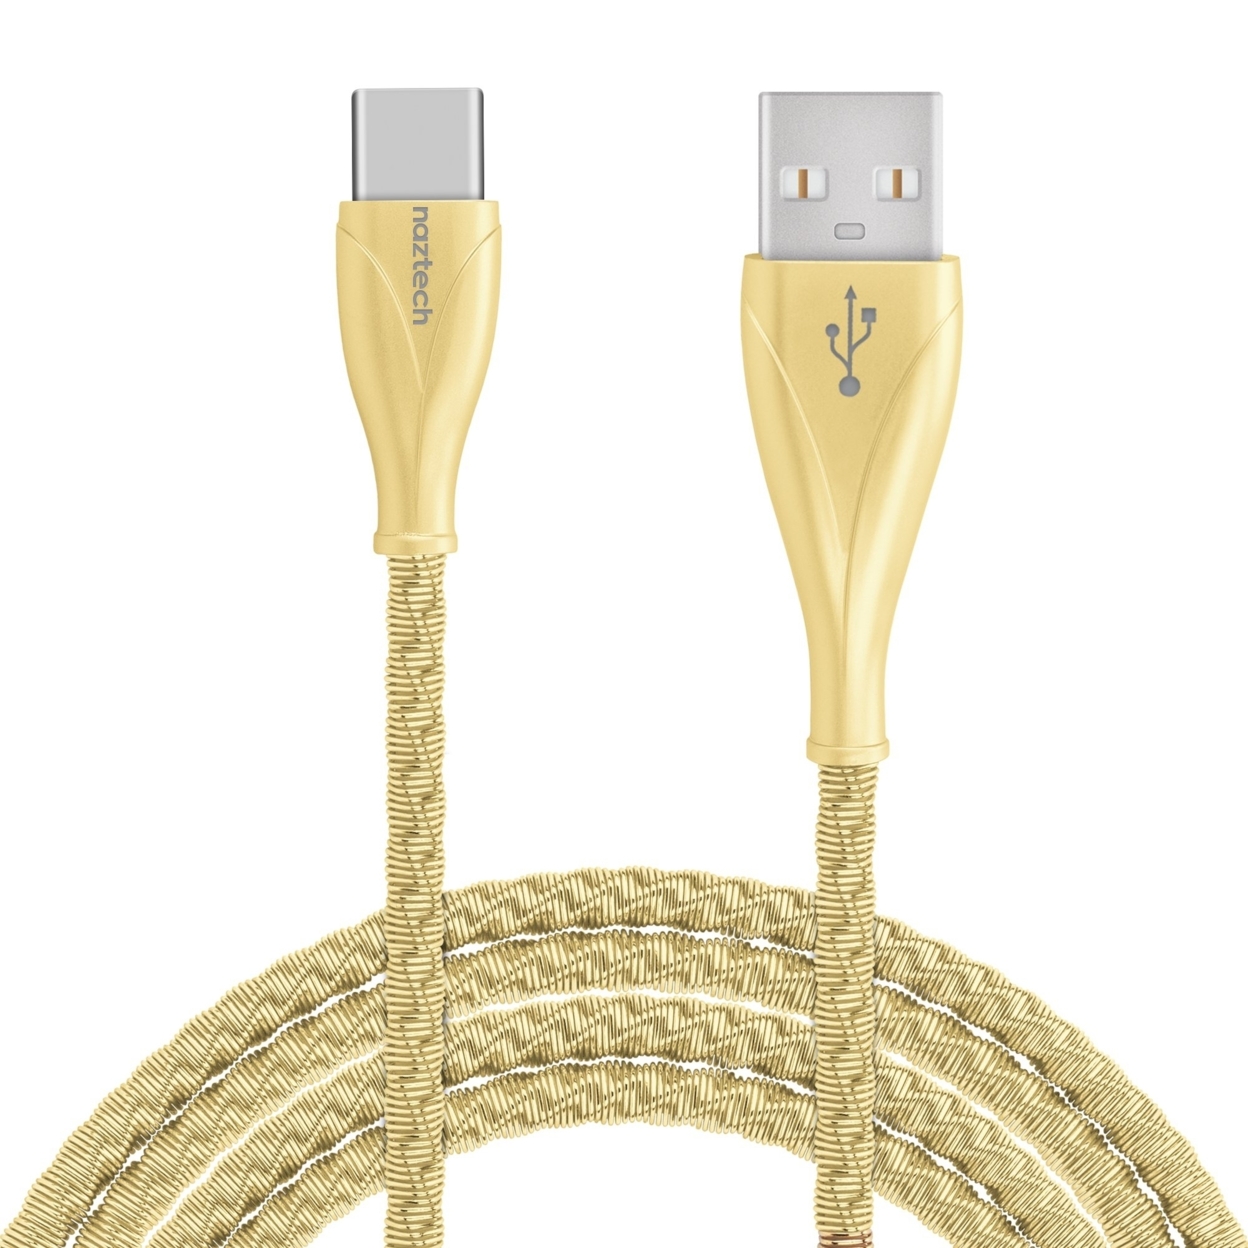 Naztech Elite Series USB-C To USB-A Metal Cable 4ft (ELITEUSB-PRNT) - Rose Gold